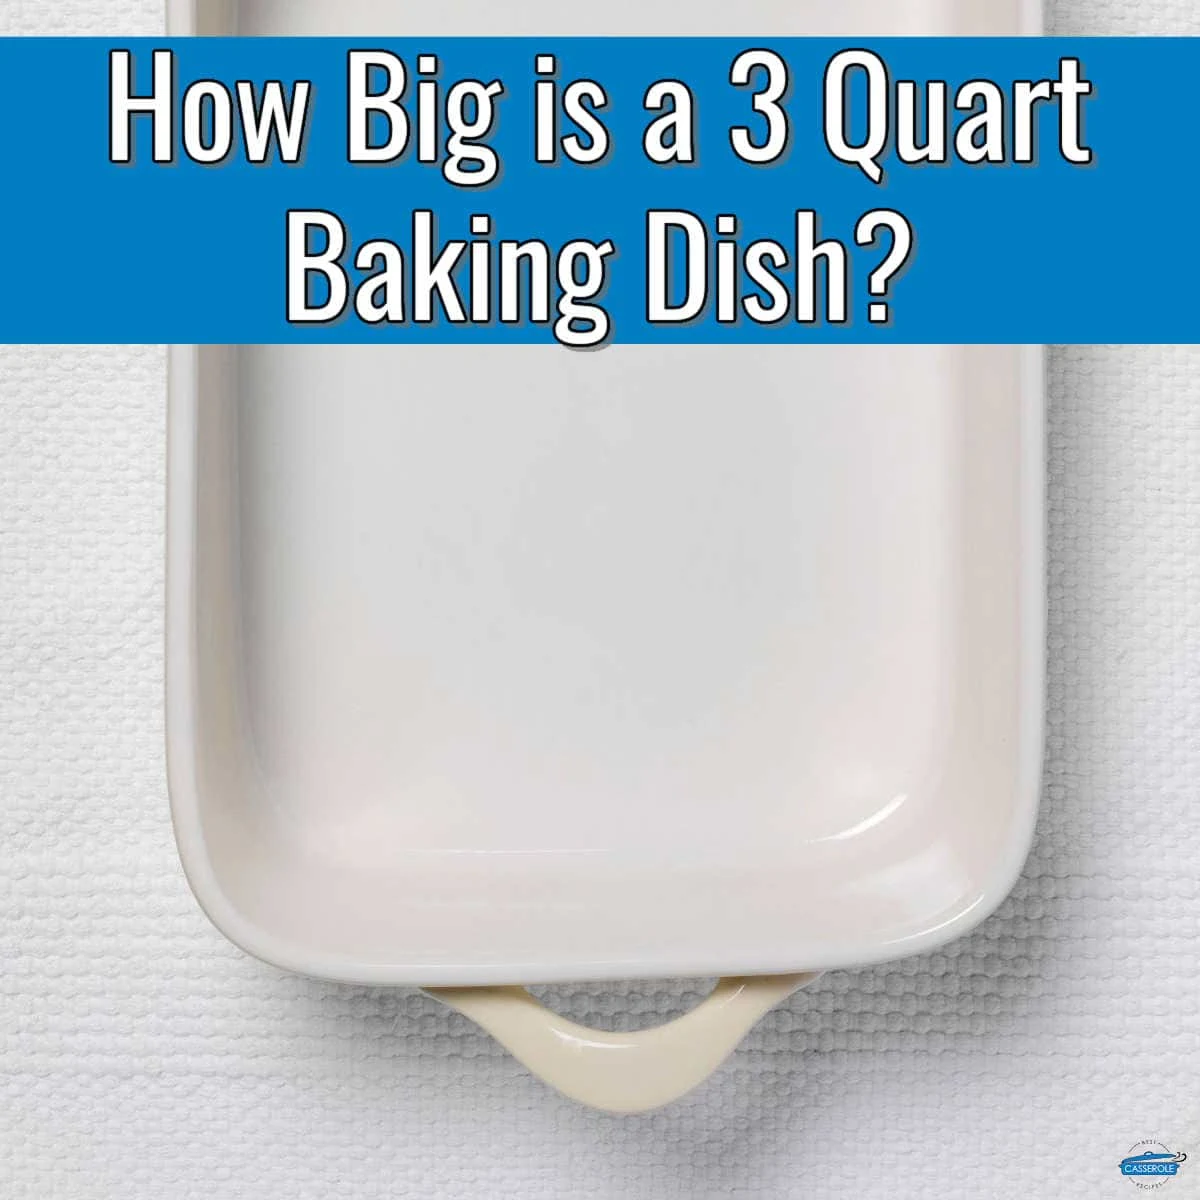 How Big is a 3 Quart Baking Dish